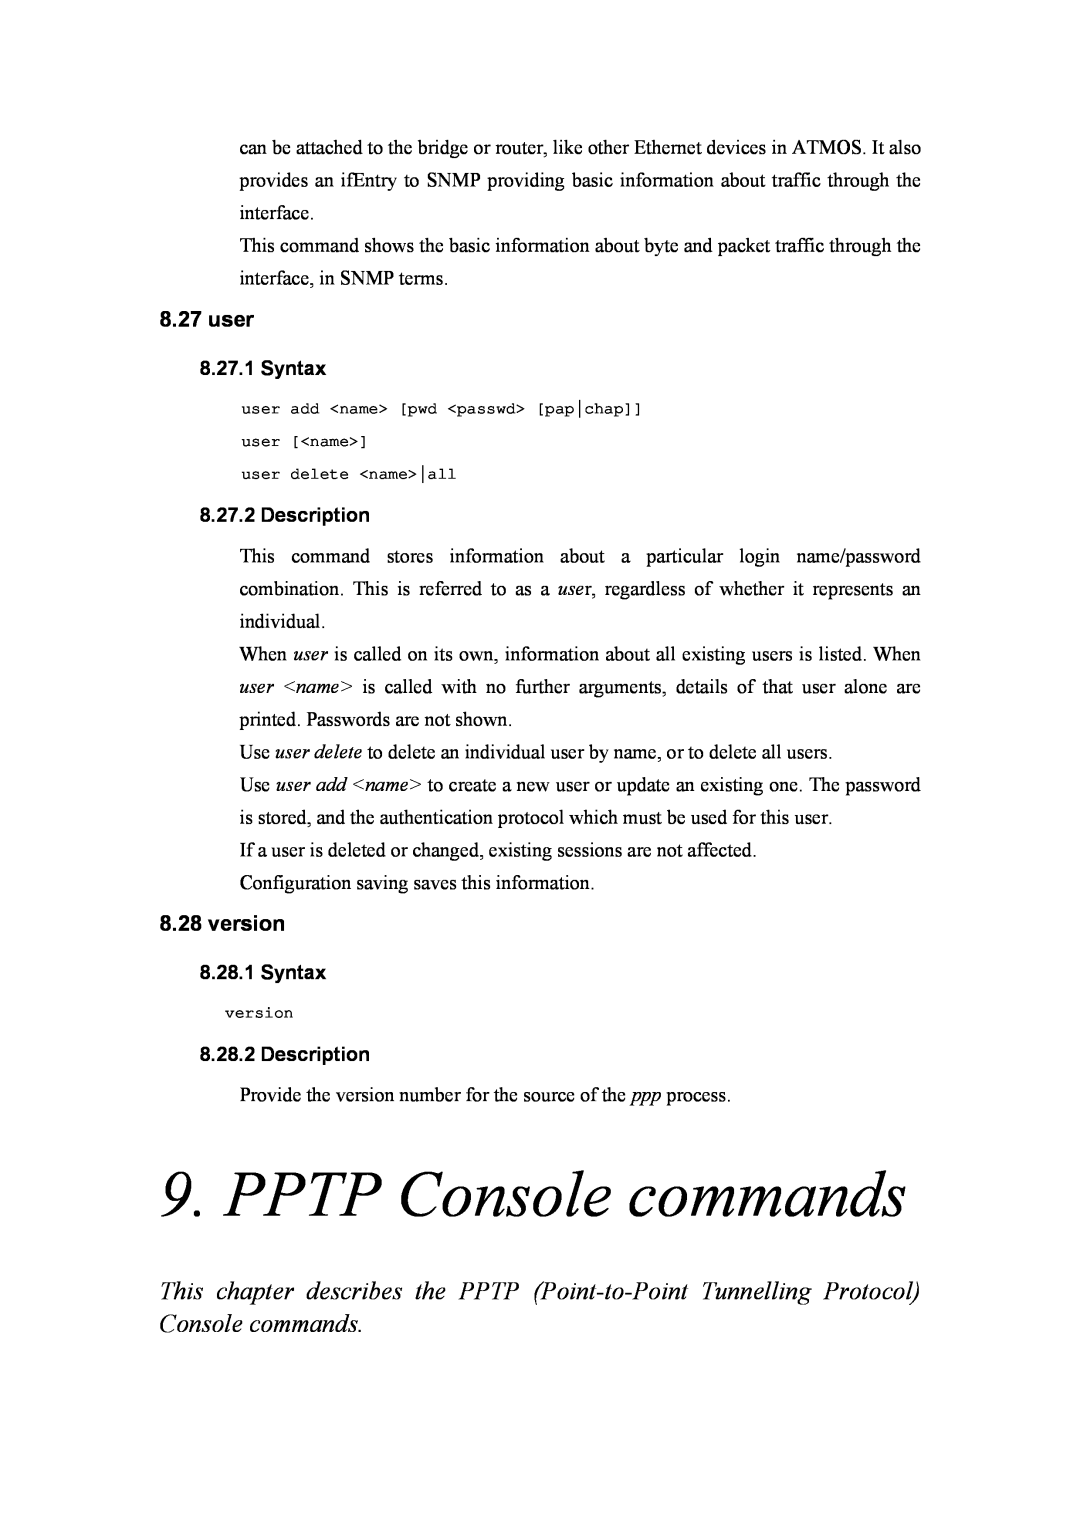 Atlantis Land A02-RA(Atmos)_ME01 manual PPTP Console commands, user, version, Syntax, Description 